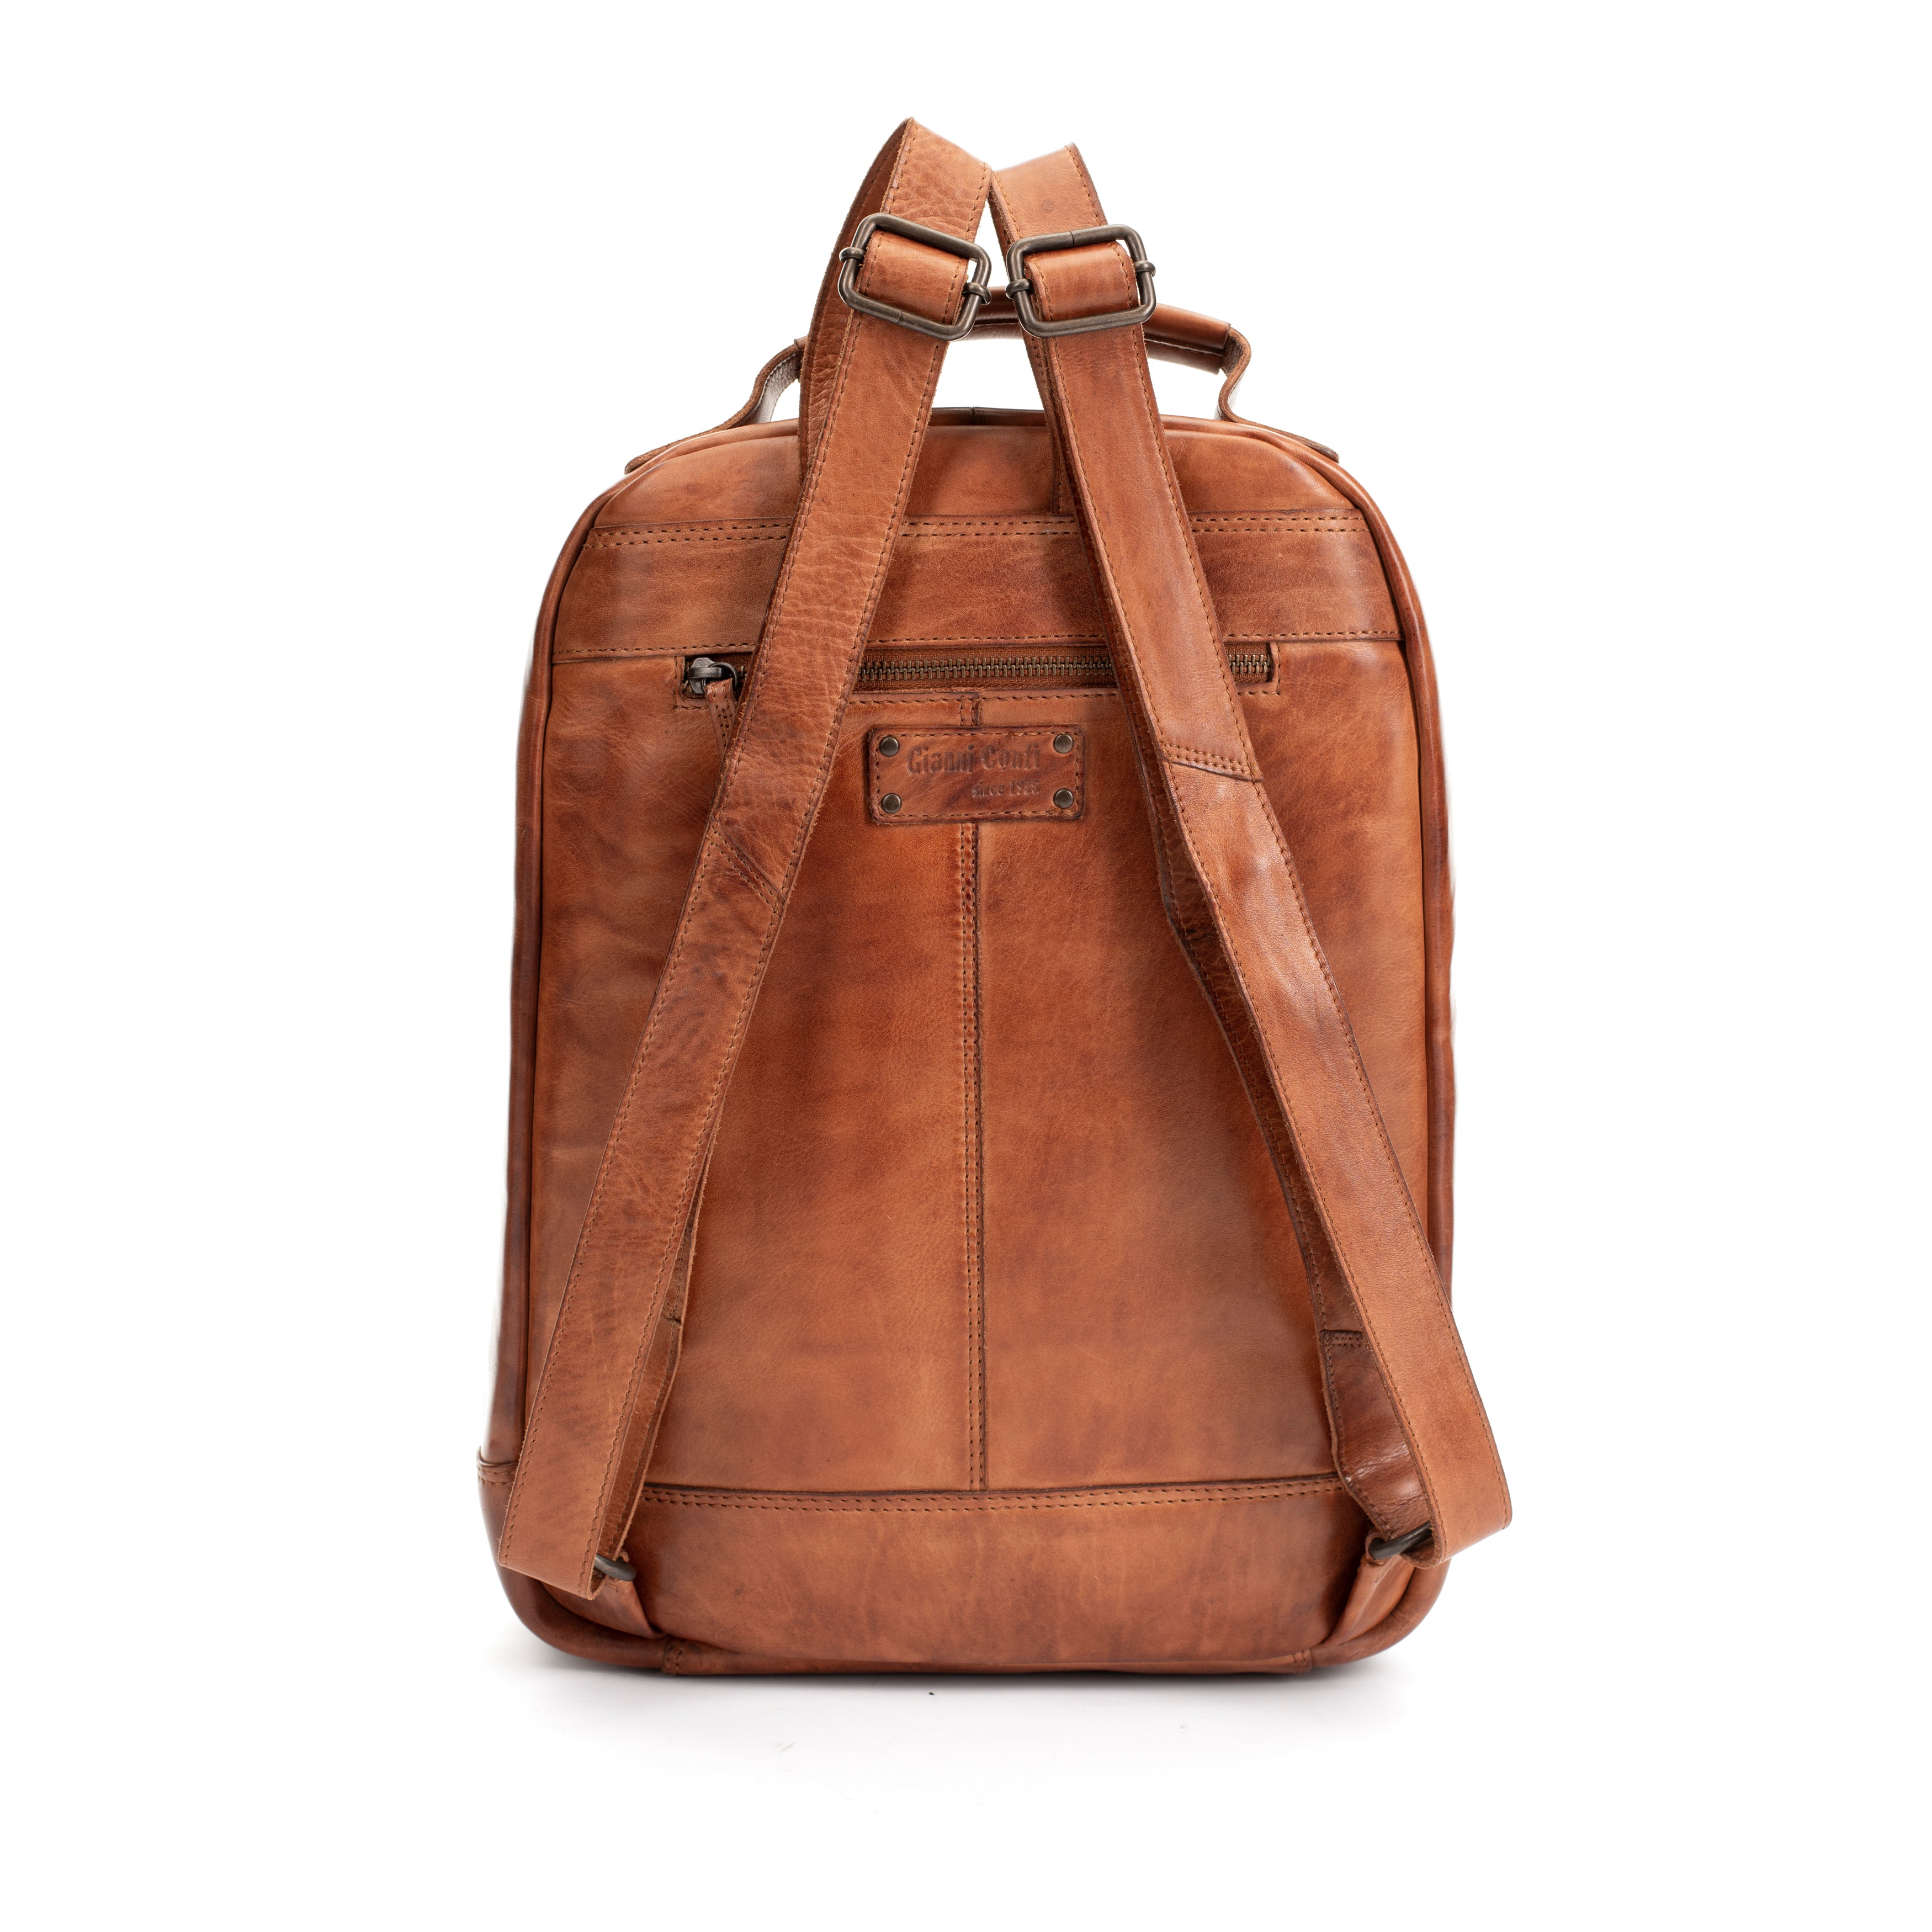 FREY Italian Leather Bag by Gianni Conti